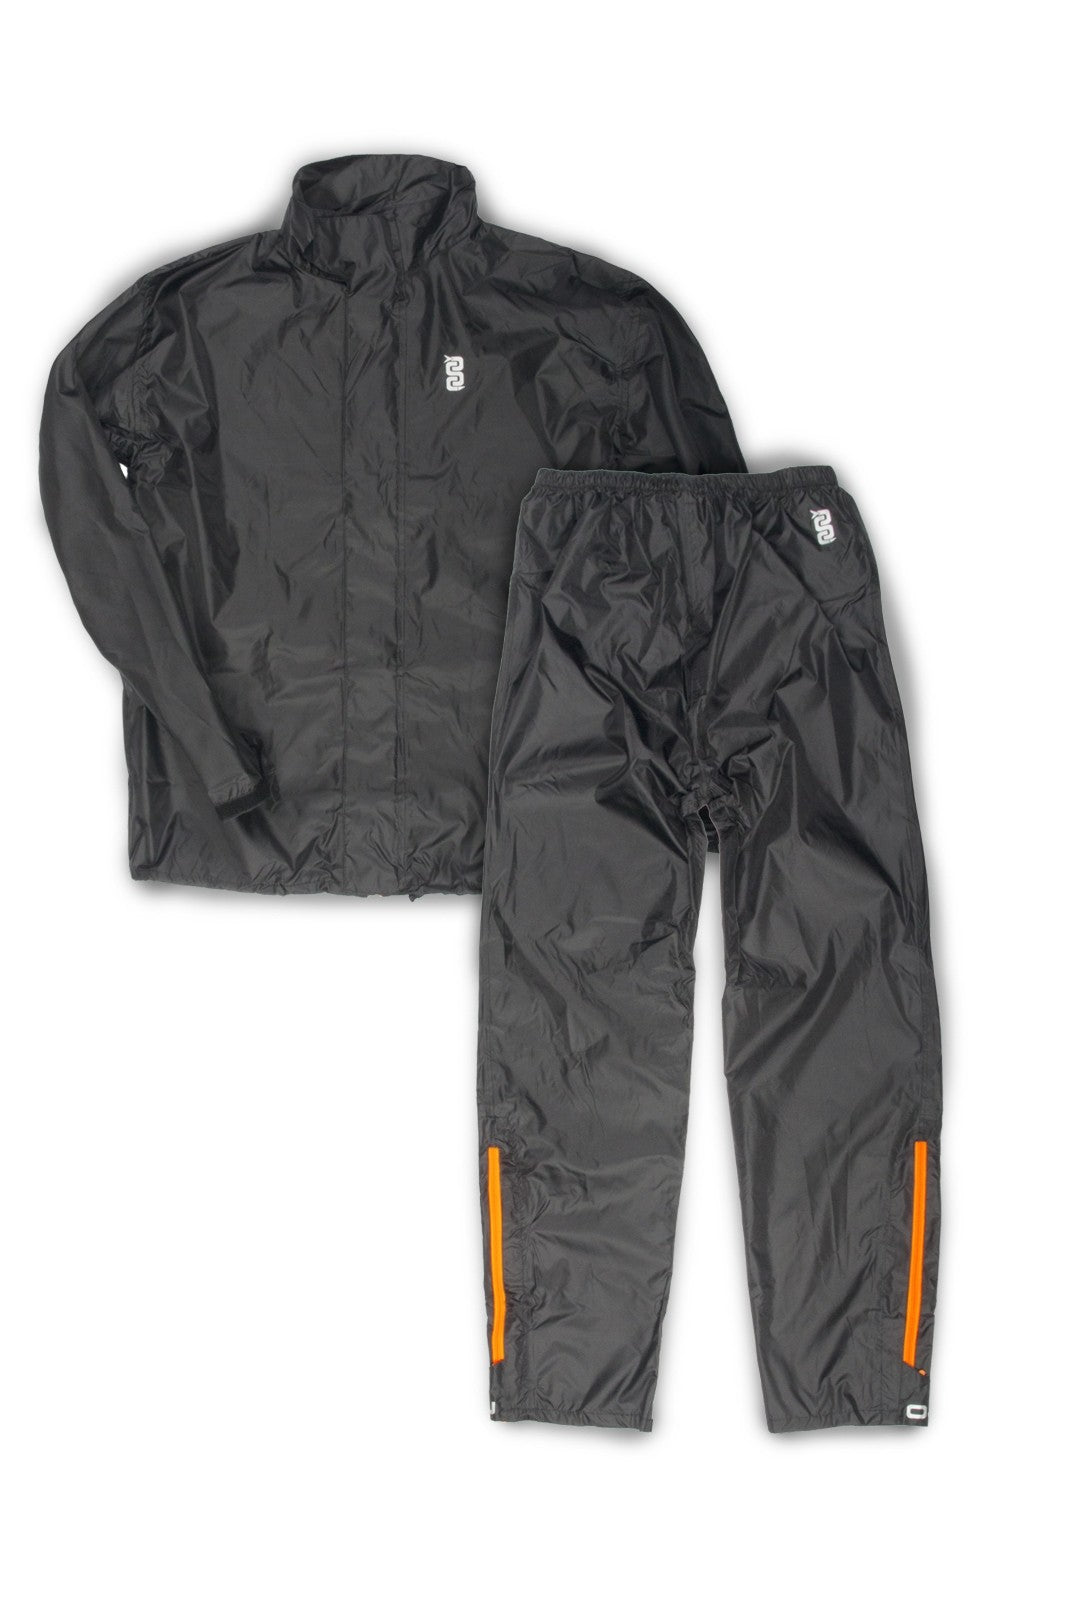 Antipioggia moto OJ SYSTEM SET NERO leggero compatto giacca e pantaloni - OnTheRoad.shop - OJ